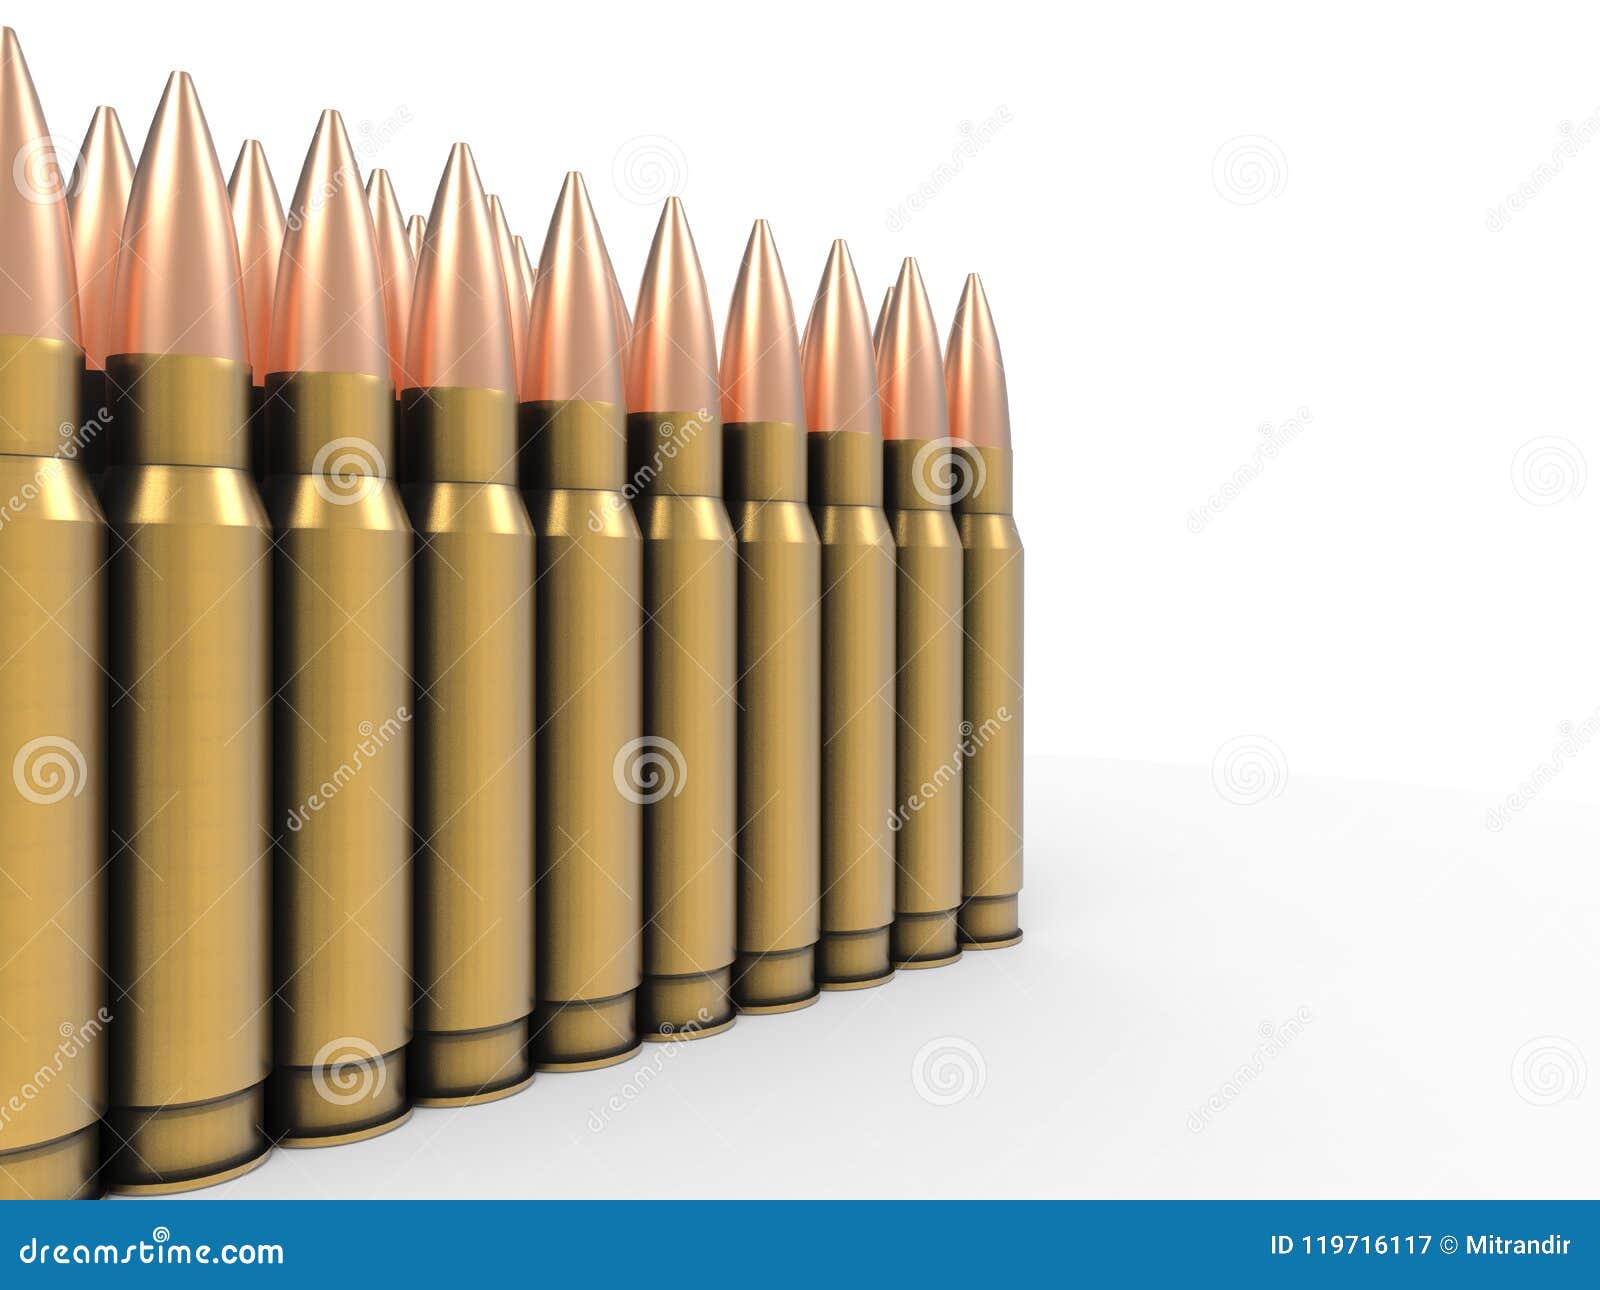 batch of ammo - high calibre bullets